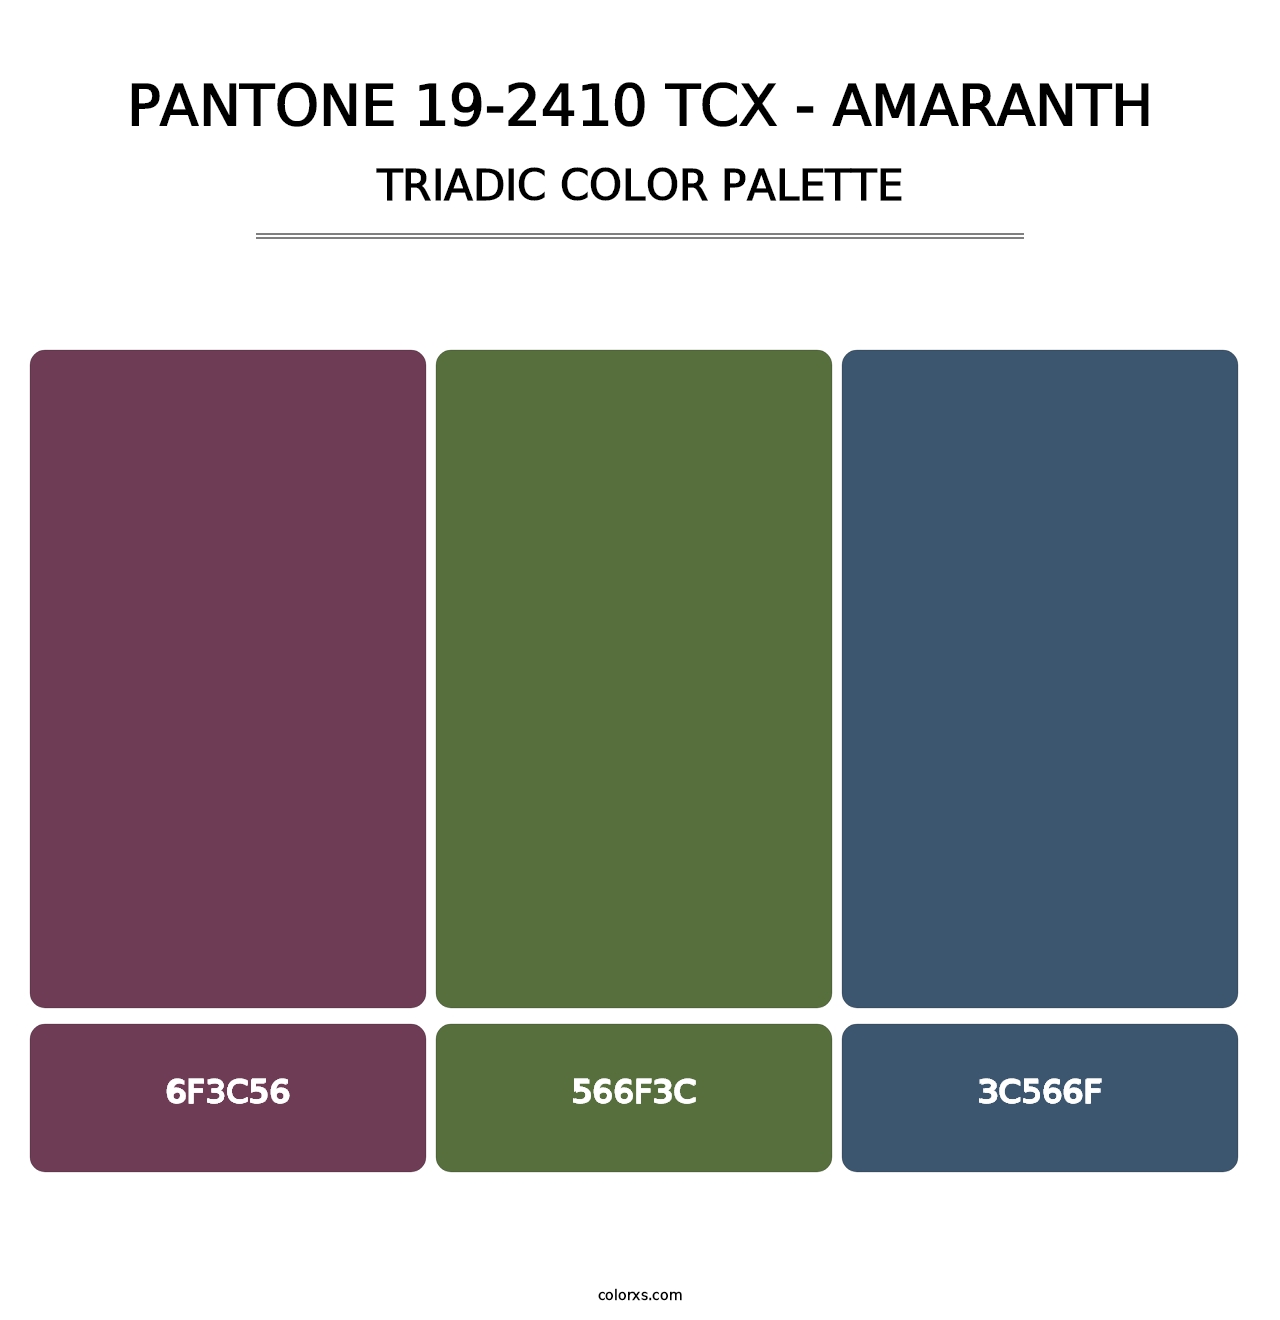 PANTONE 19-2410 TCX - Amaranth - Triadic Color Palette